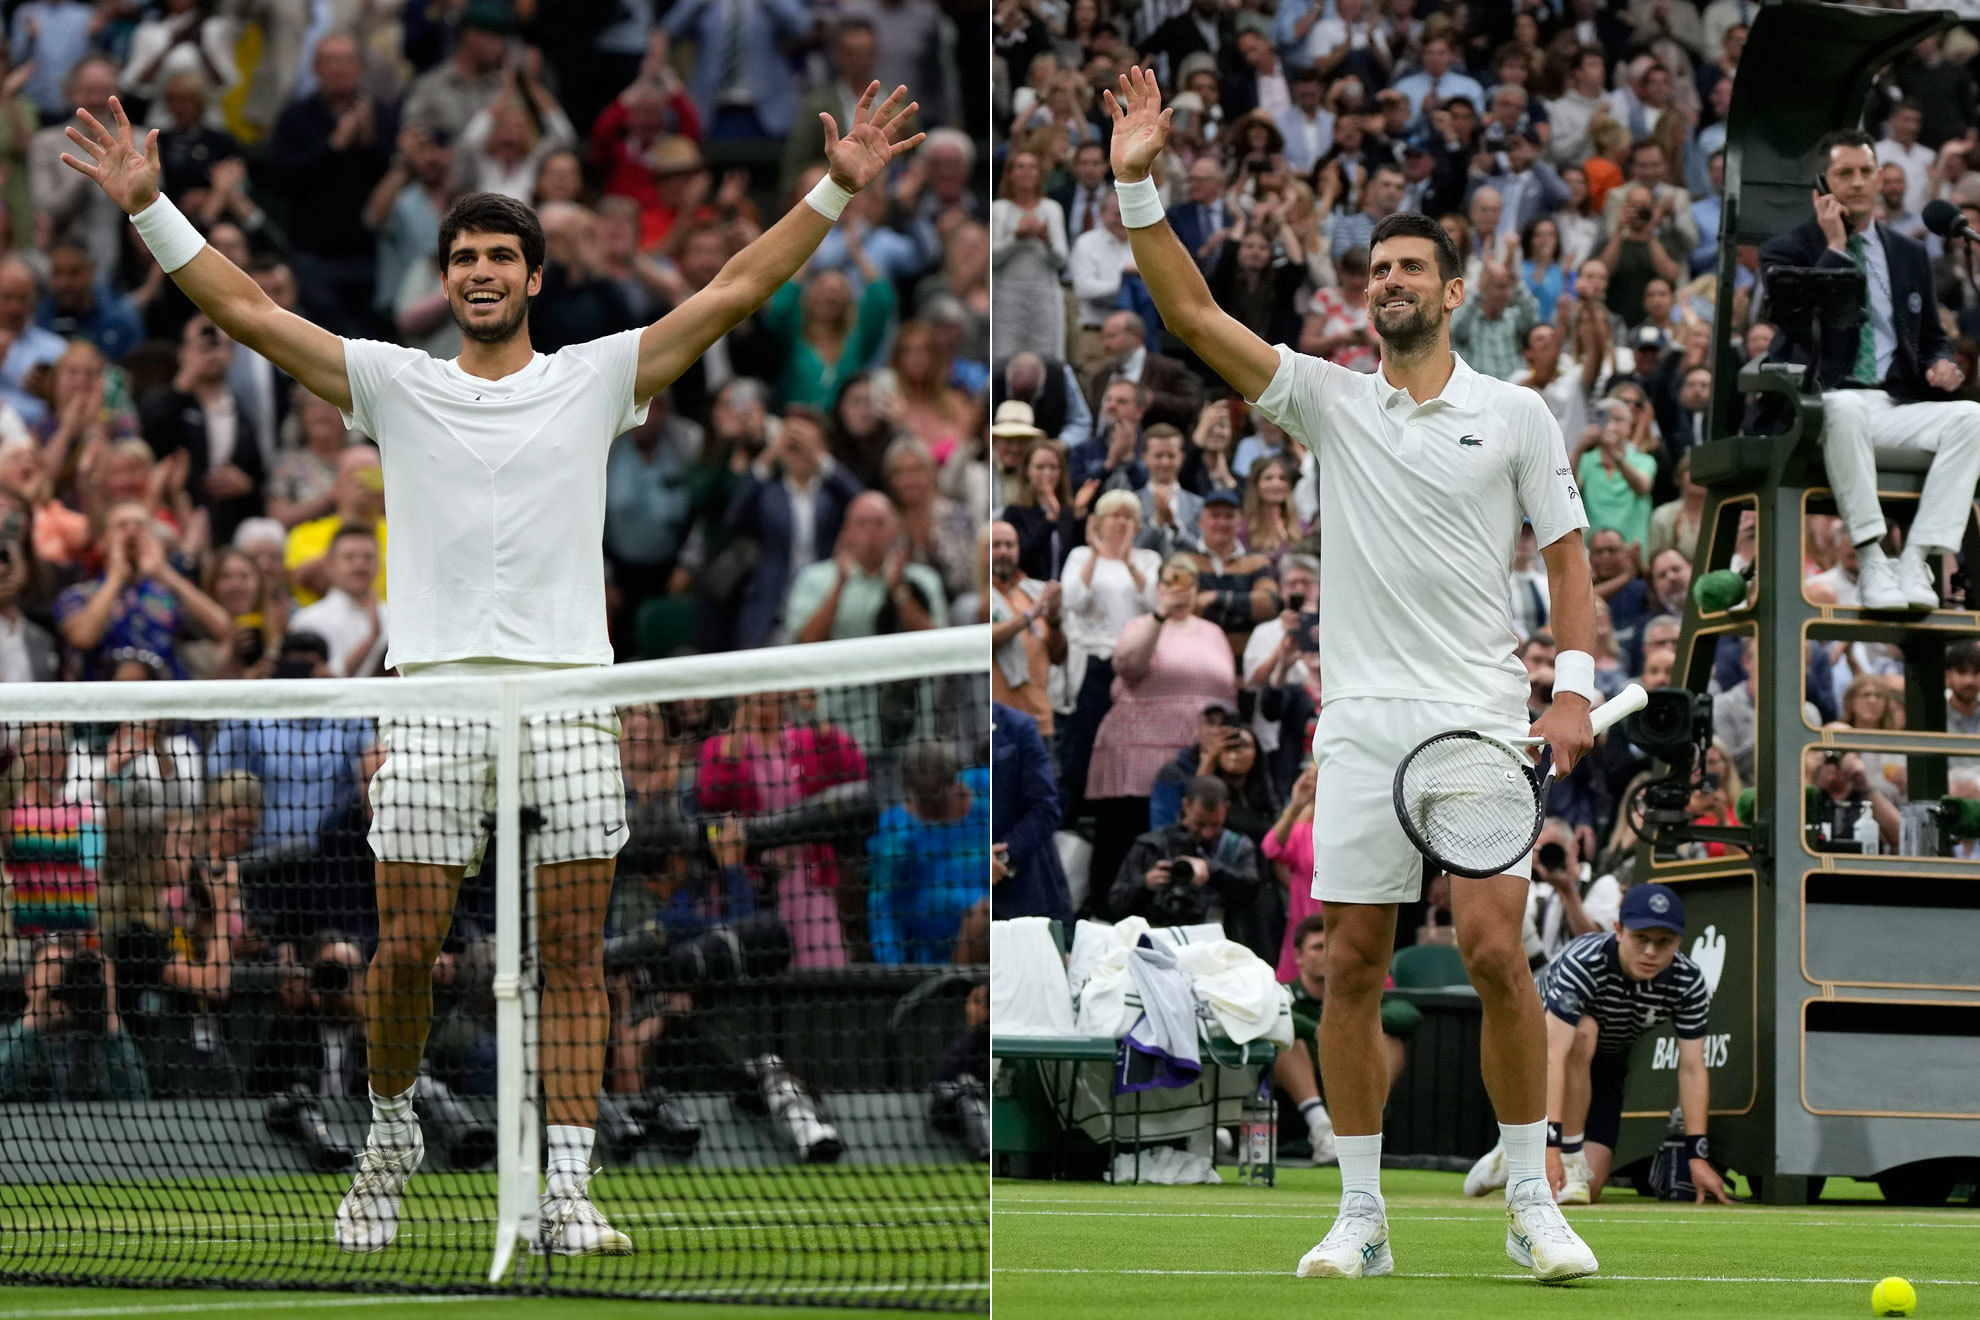 Alcaraz vs Djokovic, una final de Wimbledon colosal que vale un 'Grand Slam'... y el número uno ATP